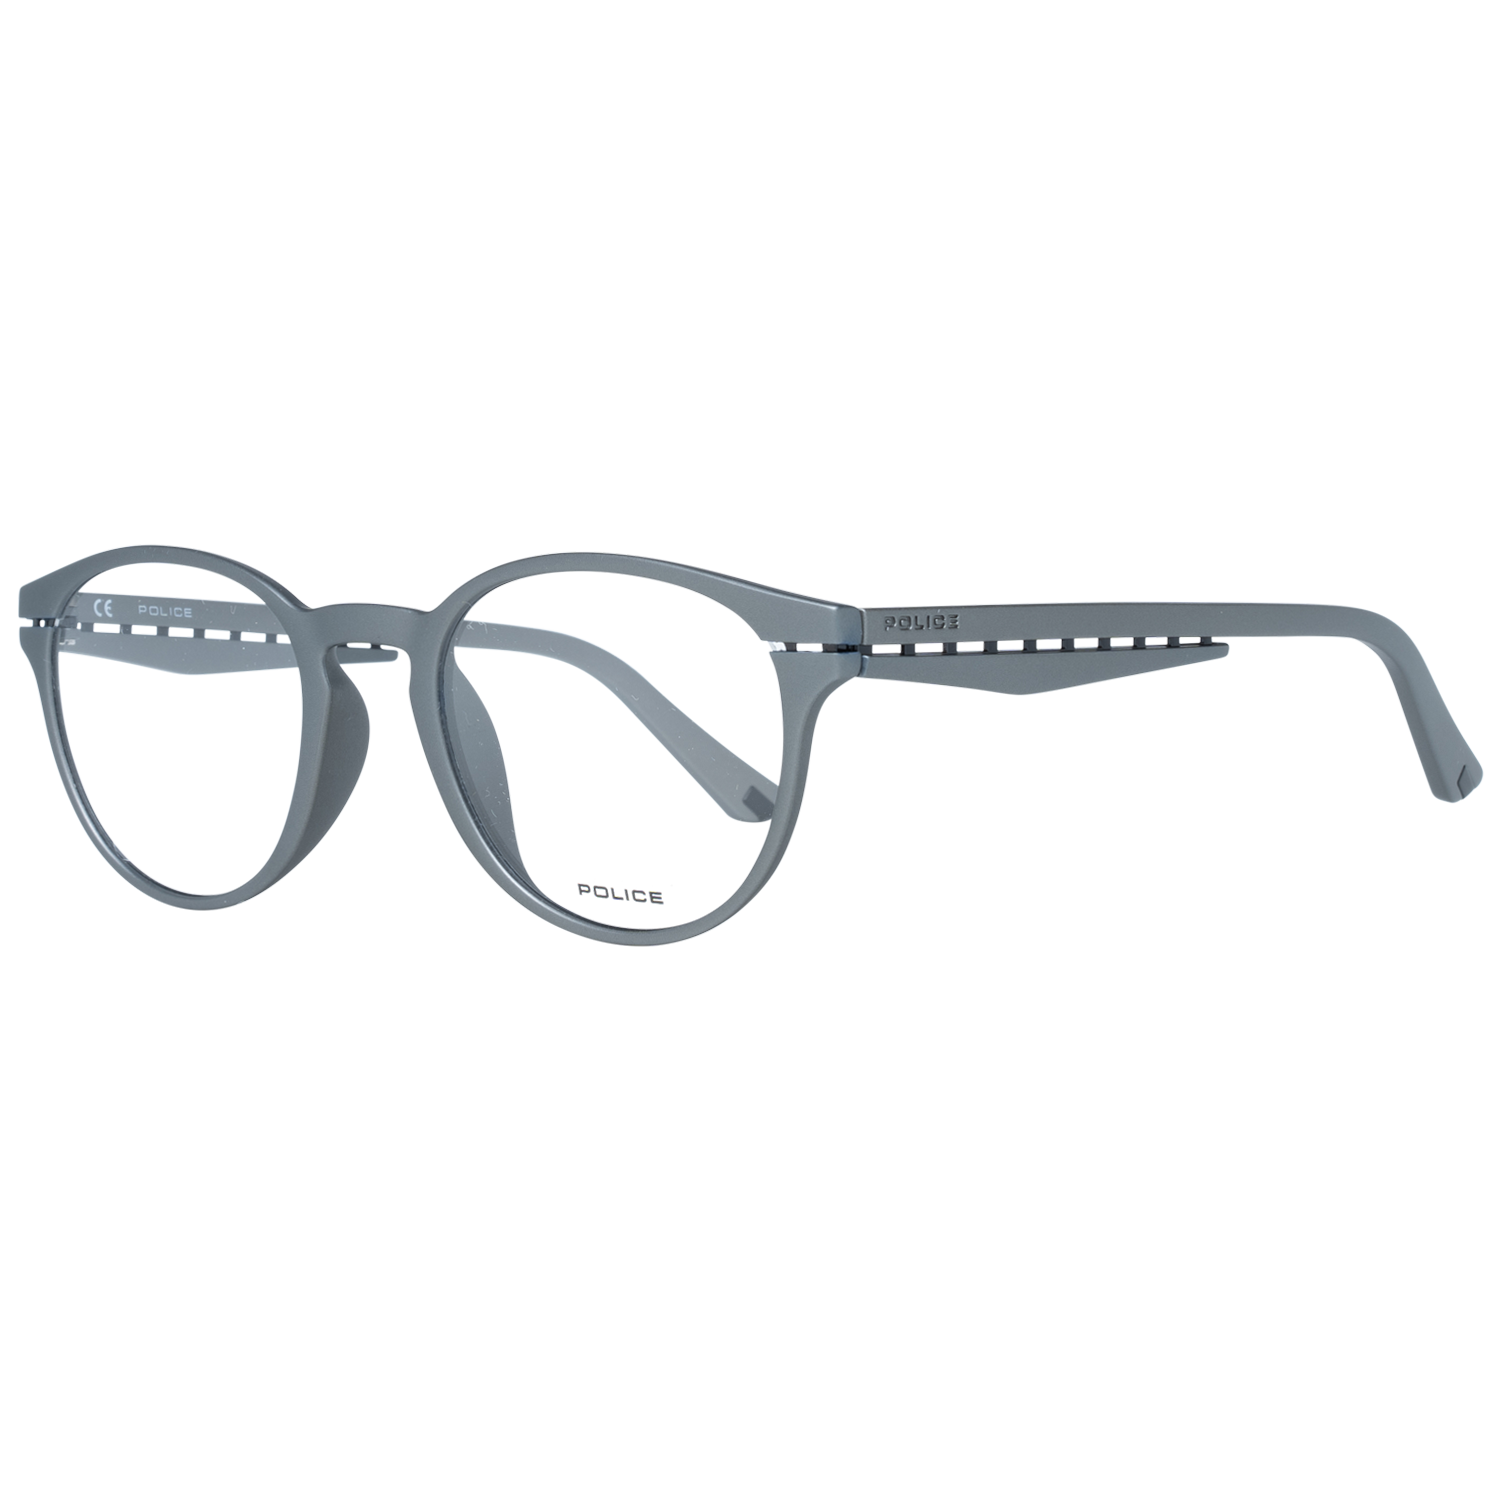 Police Frames Police Glasses Frames VPL635 096G 50 Eyeglasses Eyewear UK USA Australia 